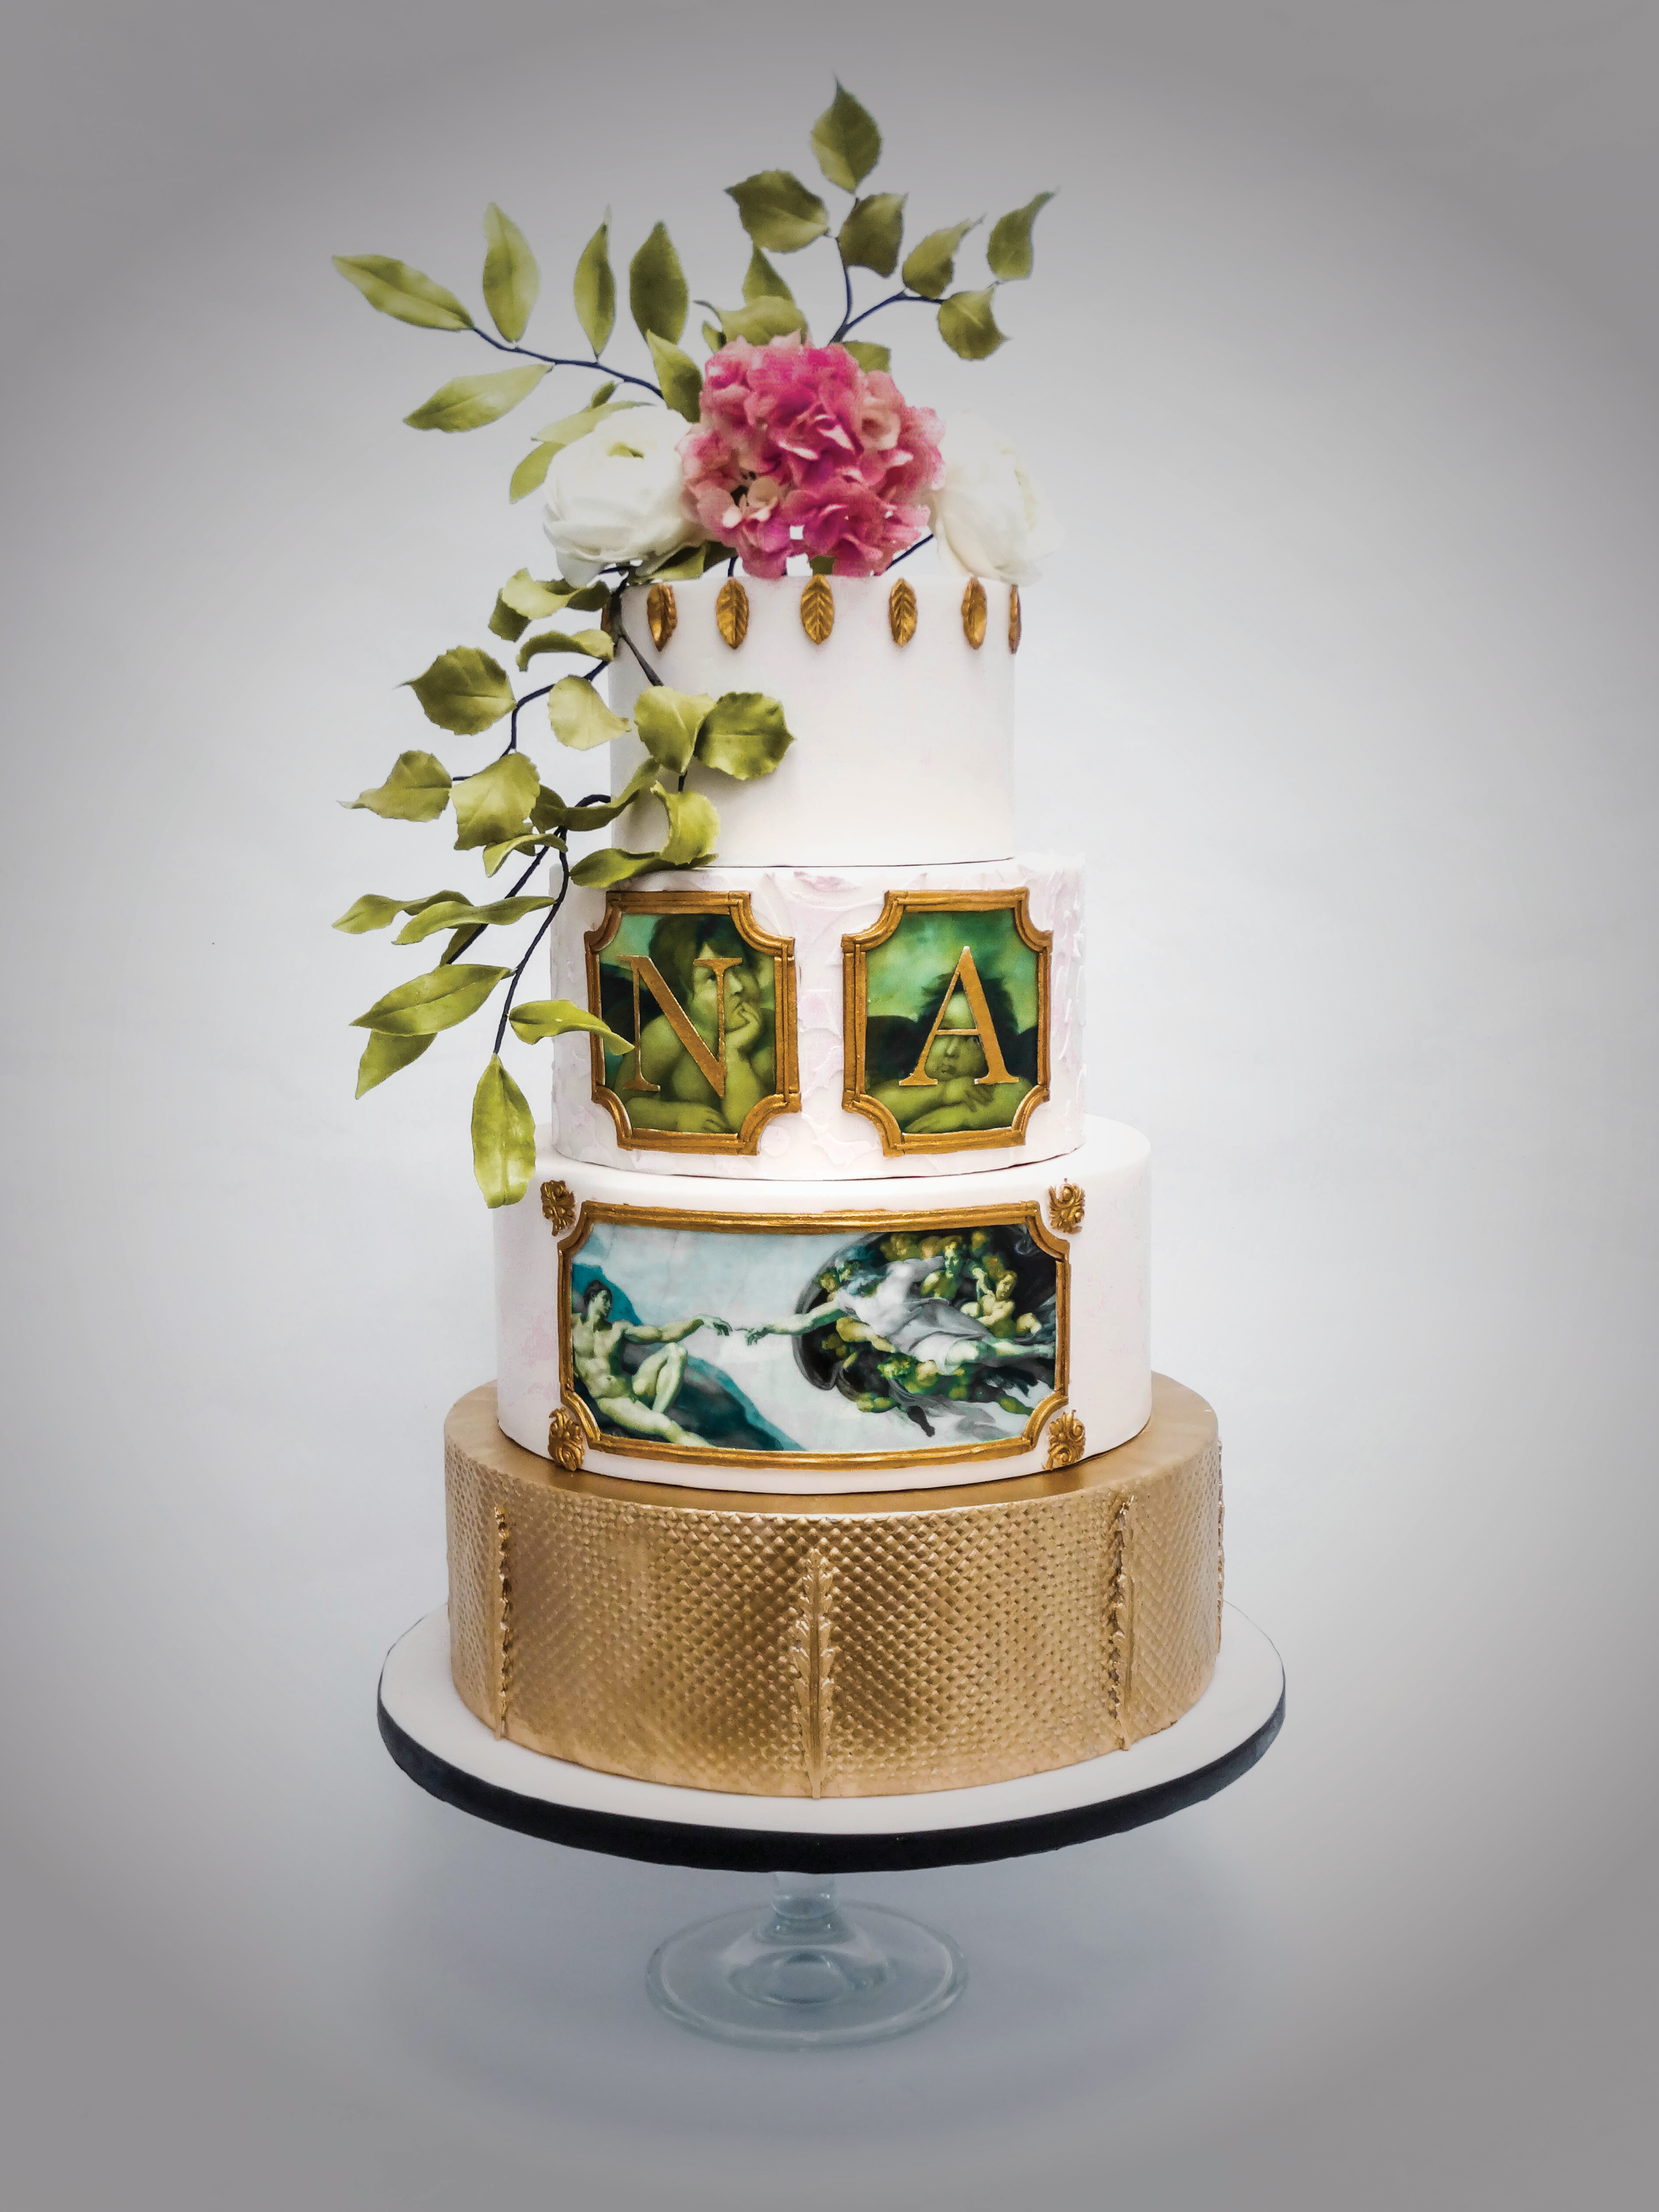 Mariage<br>Wedding Cake 